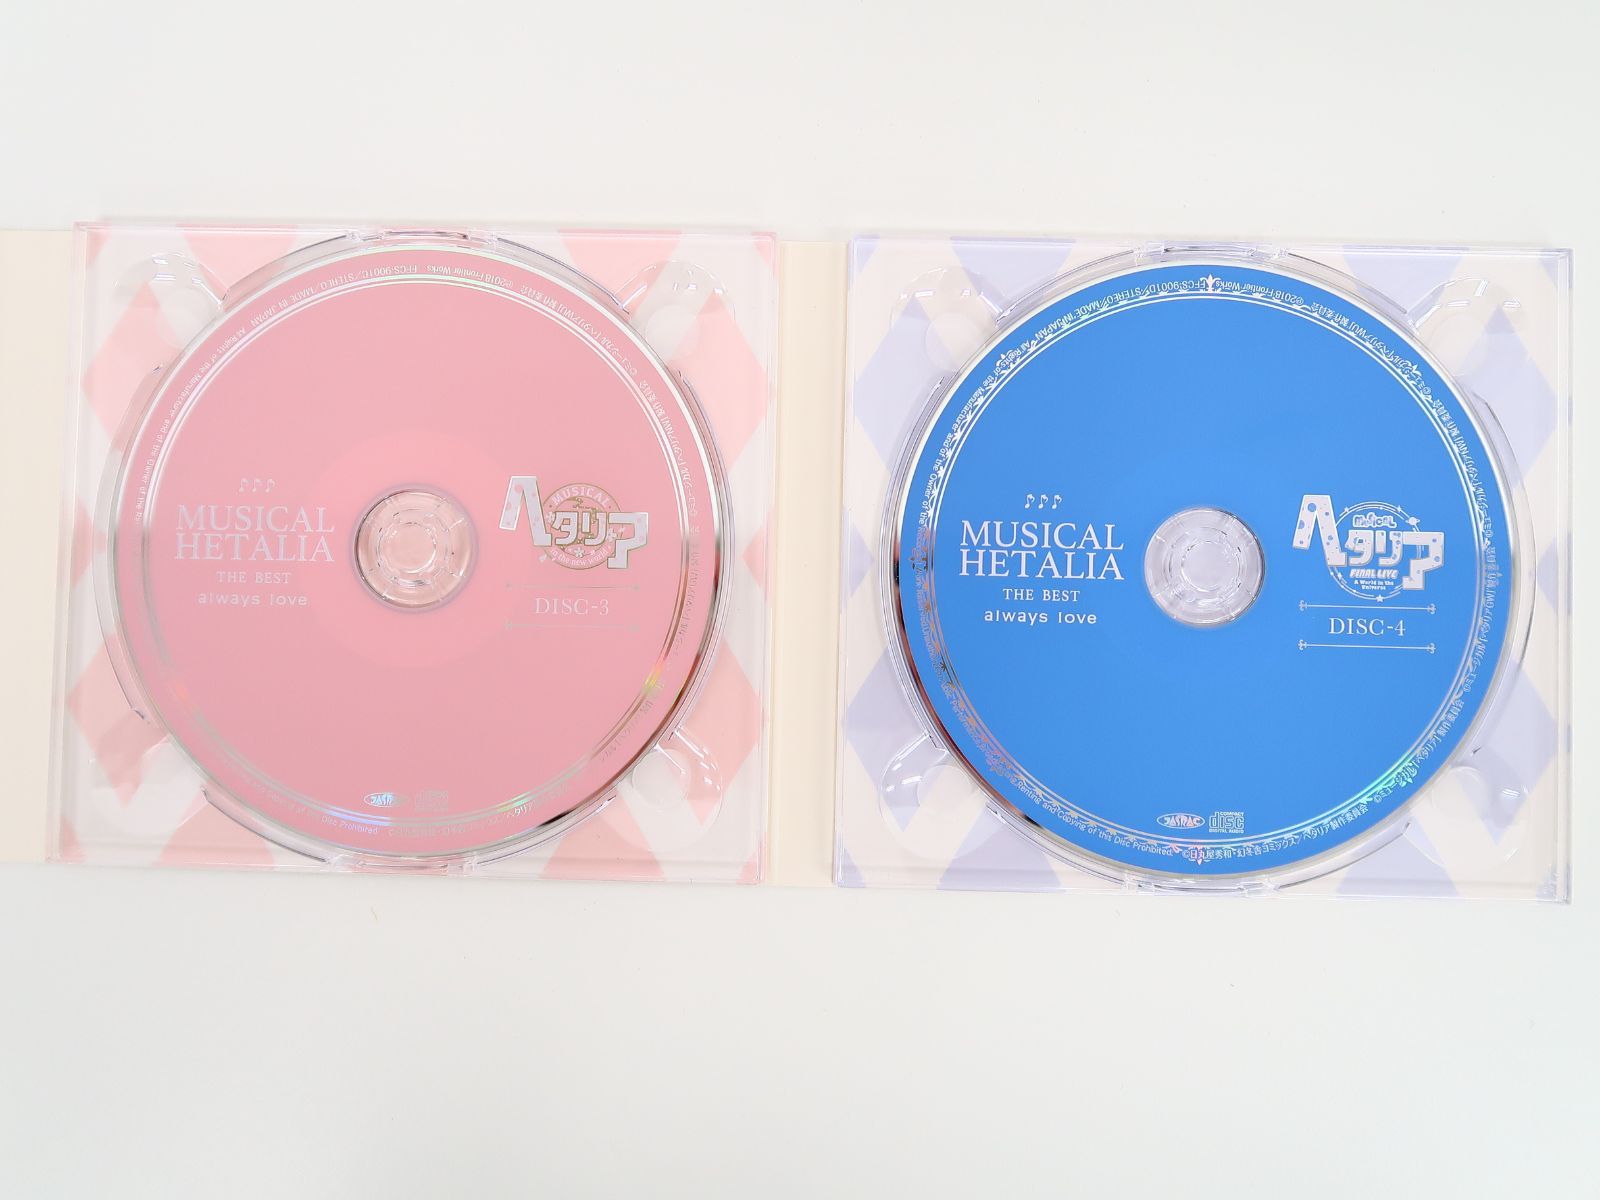 CD MUSICAL HETALIA THE BEST always love - メルカリ